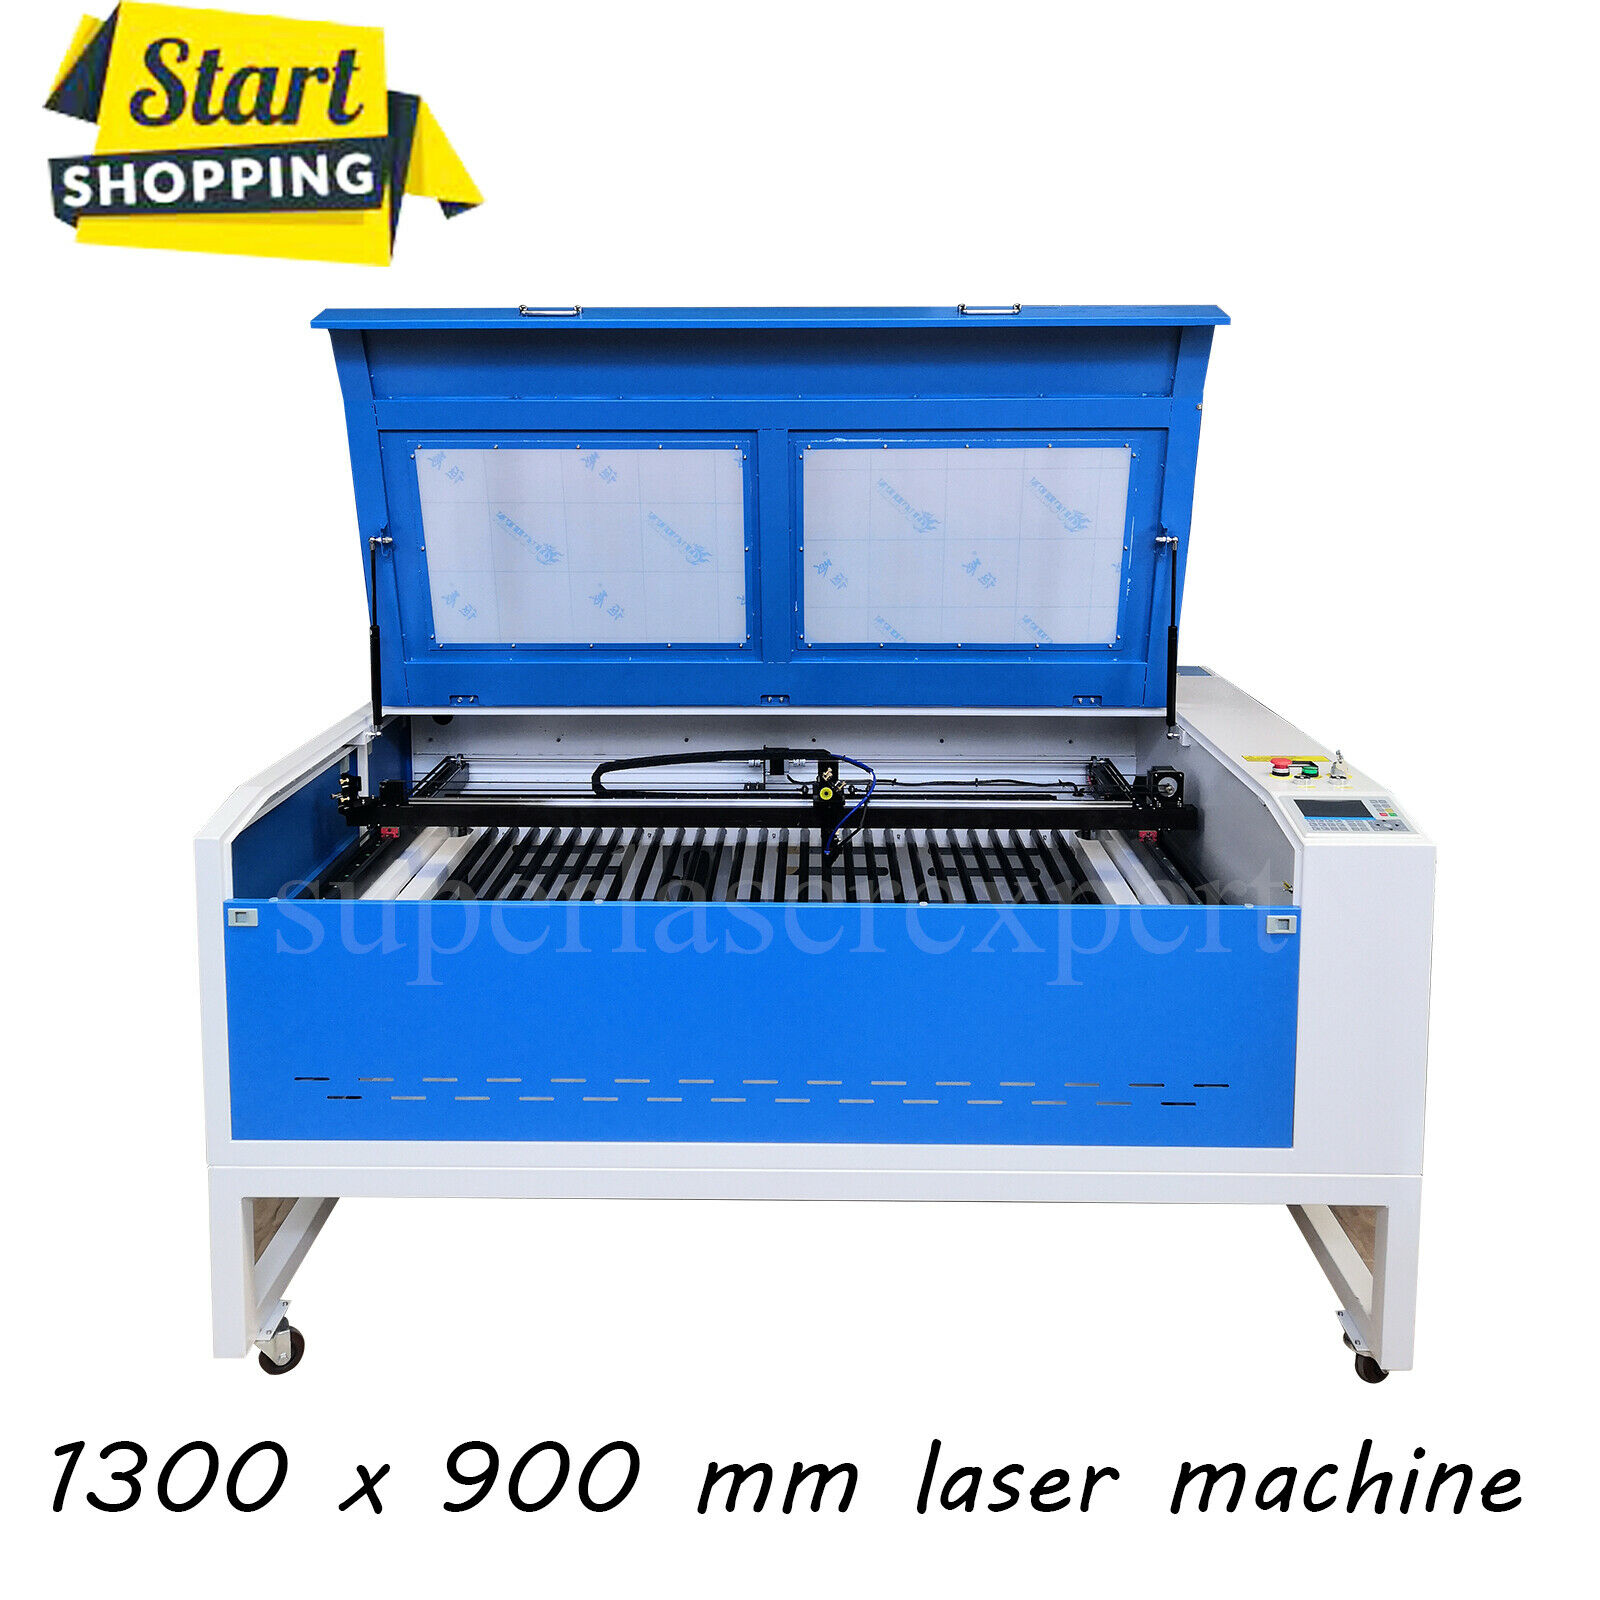 130W Ruida 1300*900mm CO2 Laser Cutting&Engraving Machine Motor Table & CW-5200